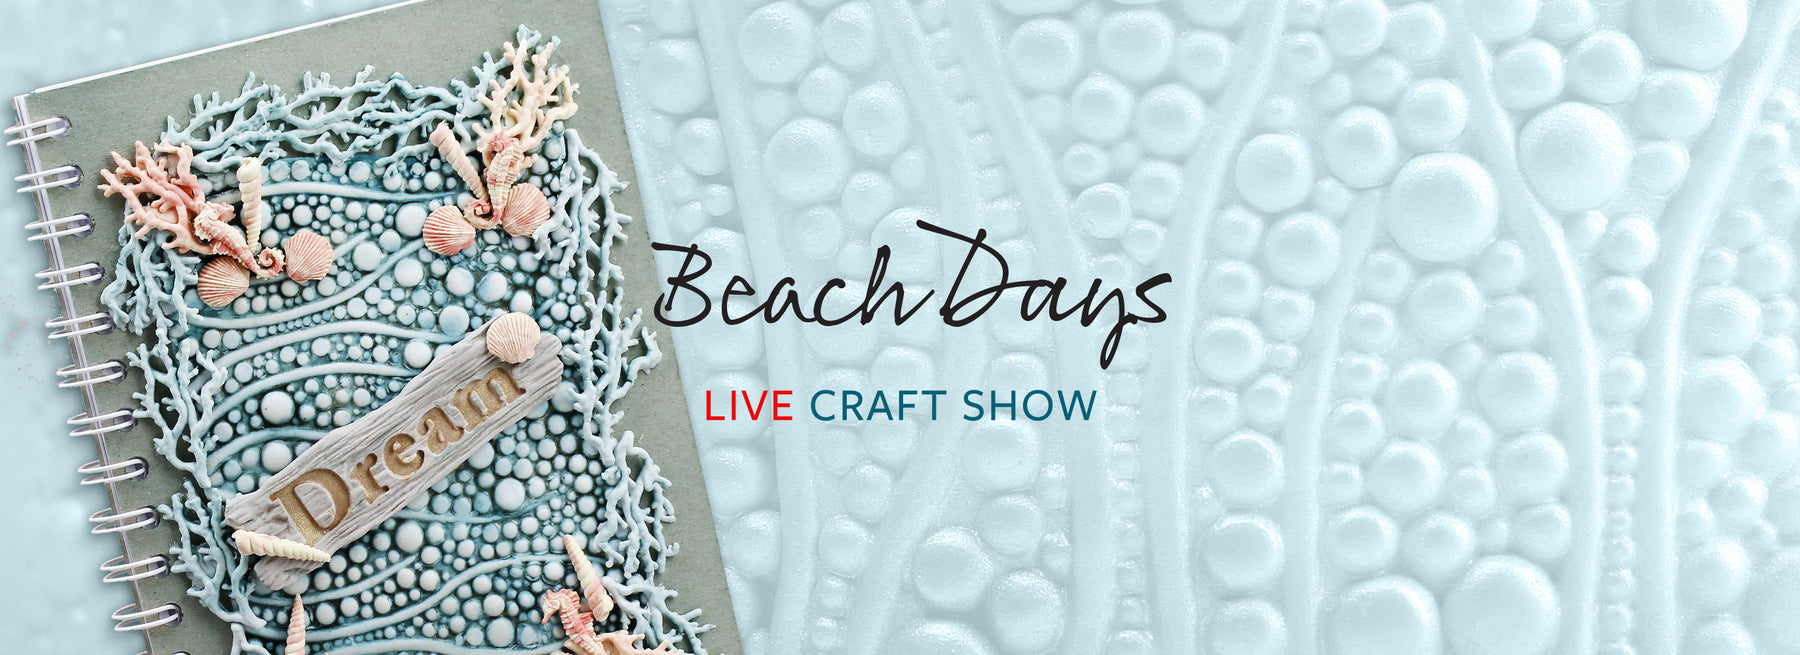 KSTV: Beach Days LIVE Craft Show